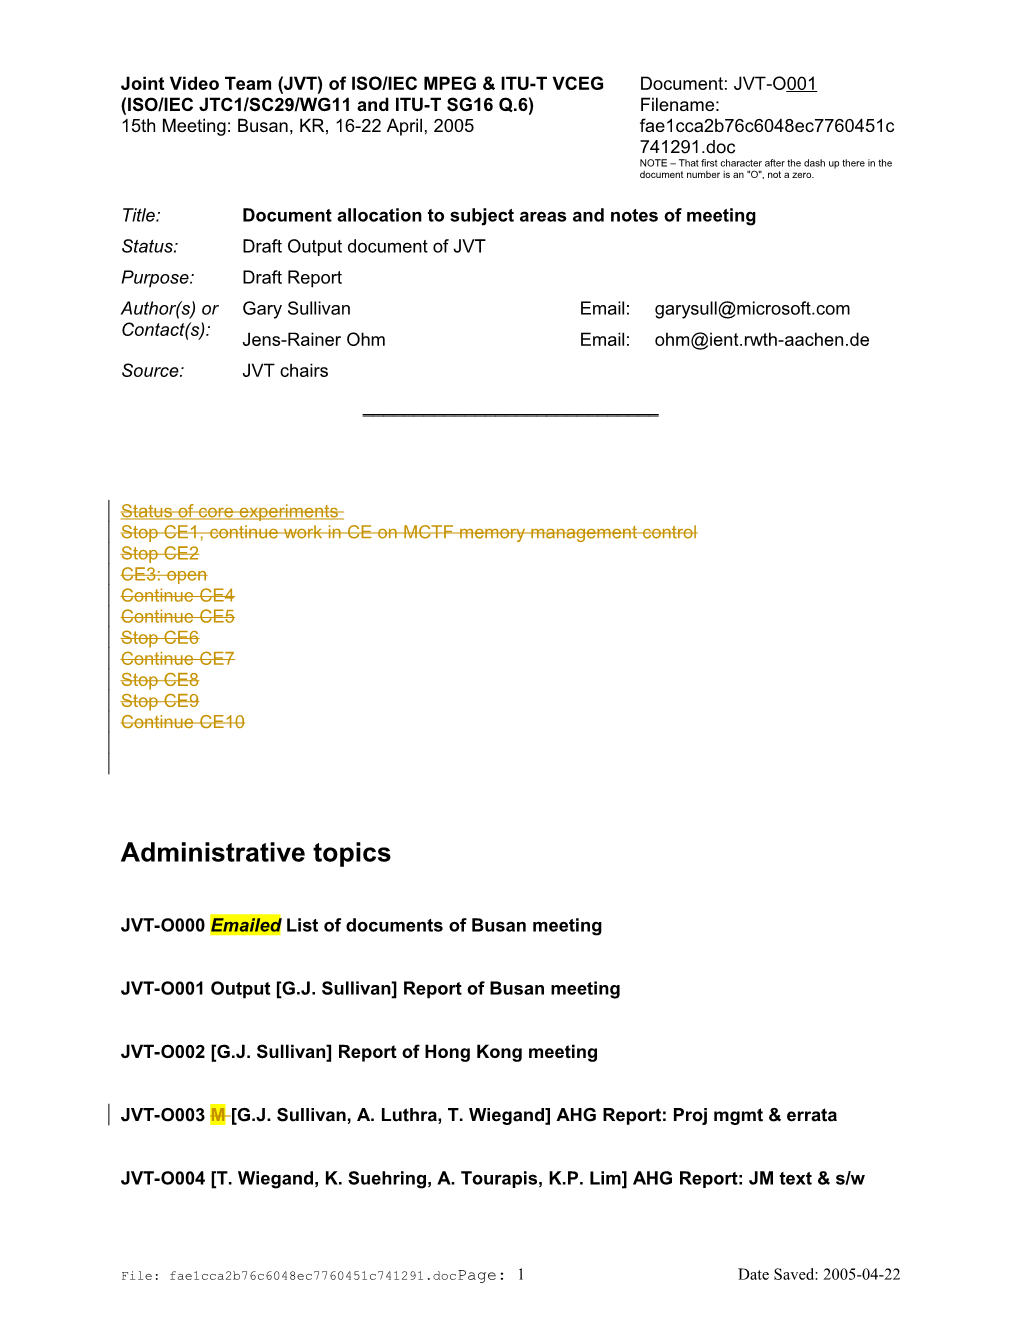 Joint Video Team (MPEG+ITU) Document